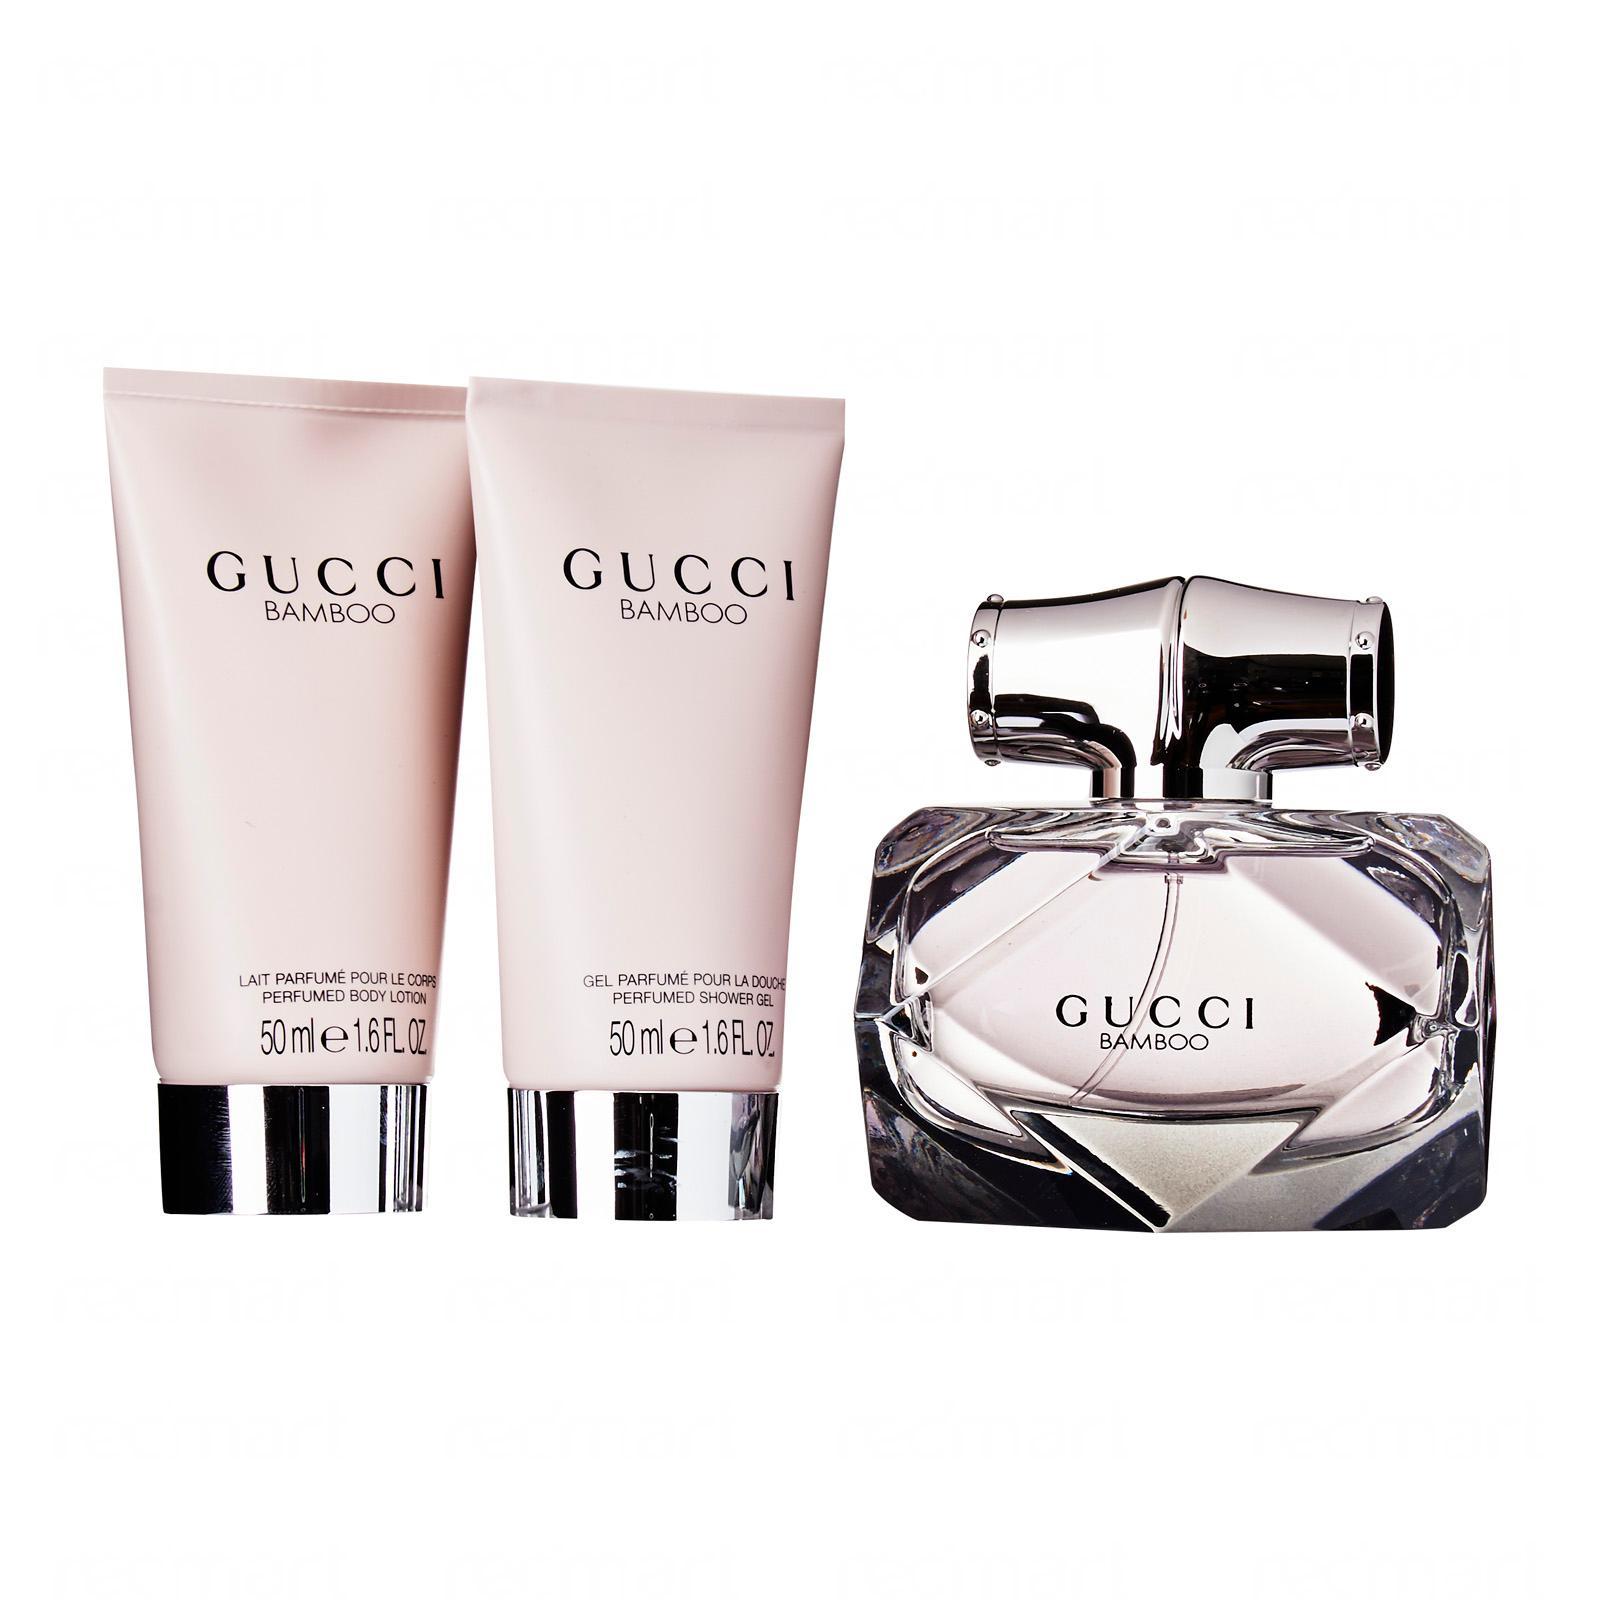 Gucci Bamboo Travel Gift set Perfume 